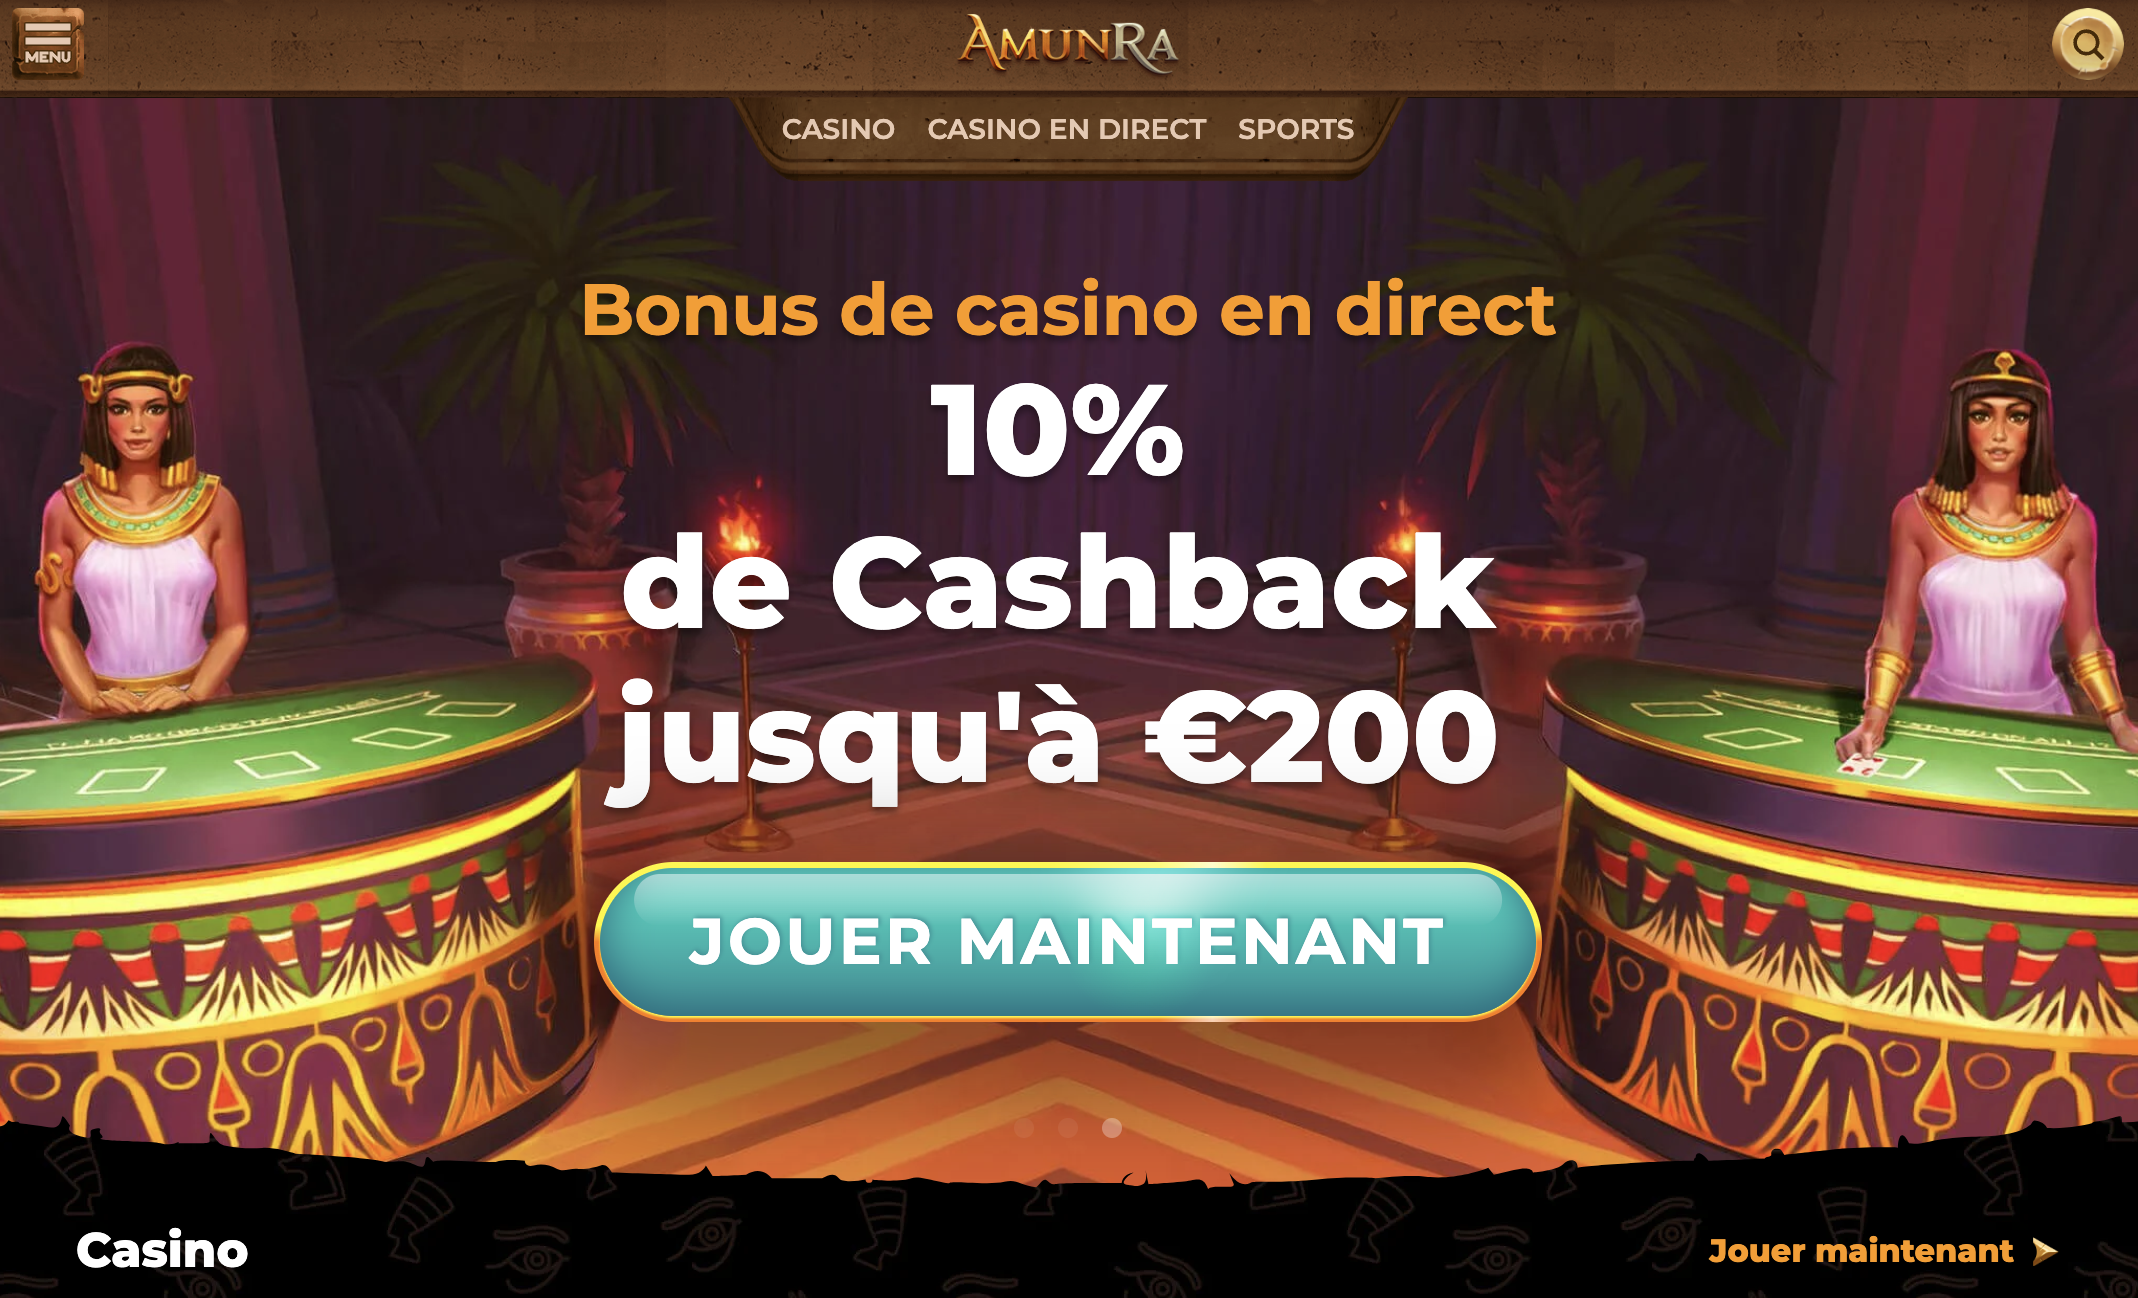 Amunra casino : interface et design